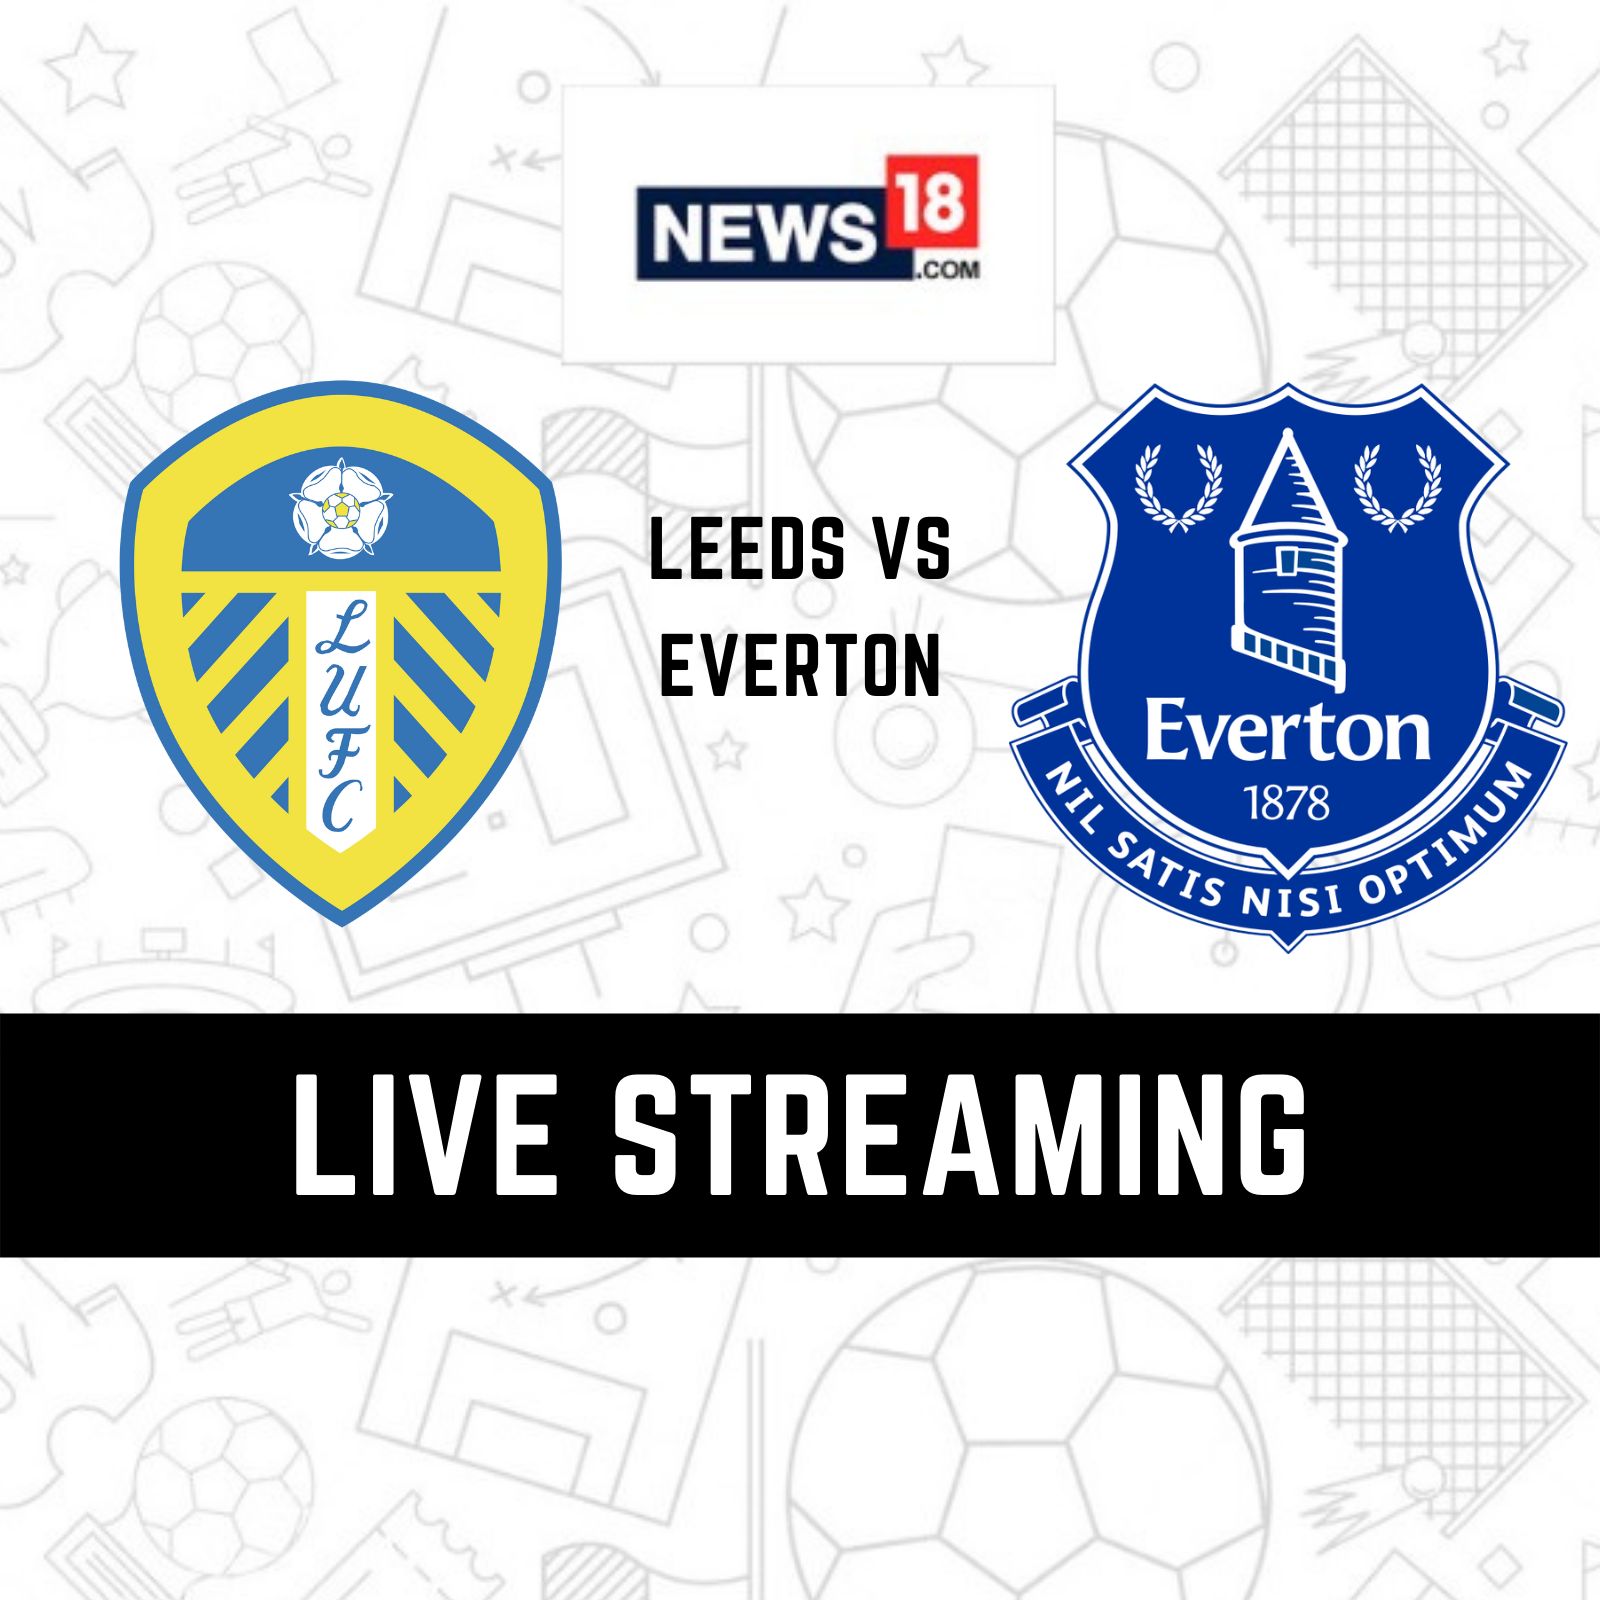 Leeds United vs Everton Live Streaming When and Where to Watch Leeds United vs Everton Premier League Live Coverage on Live TV Online